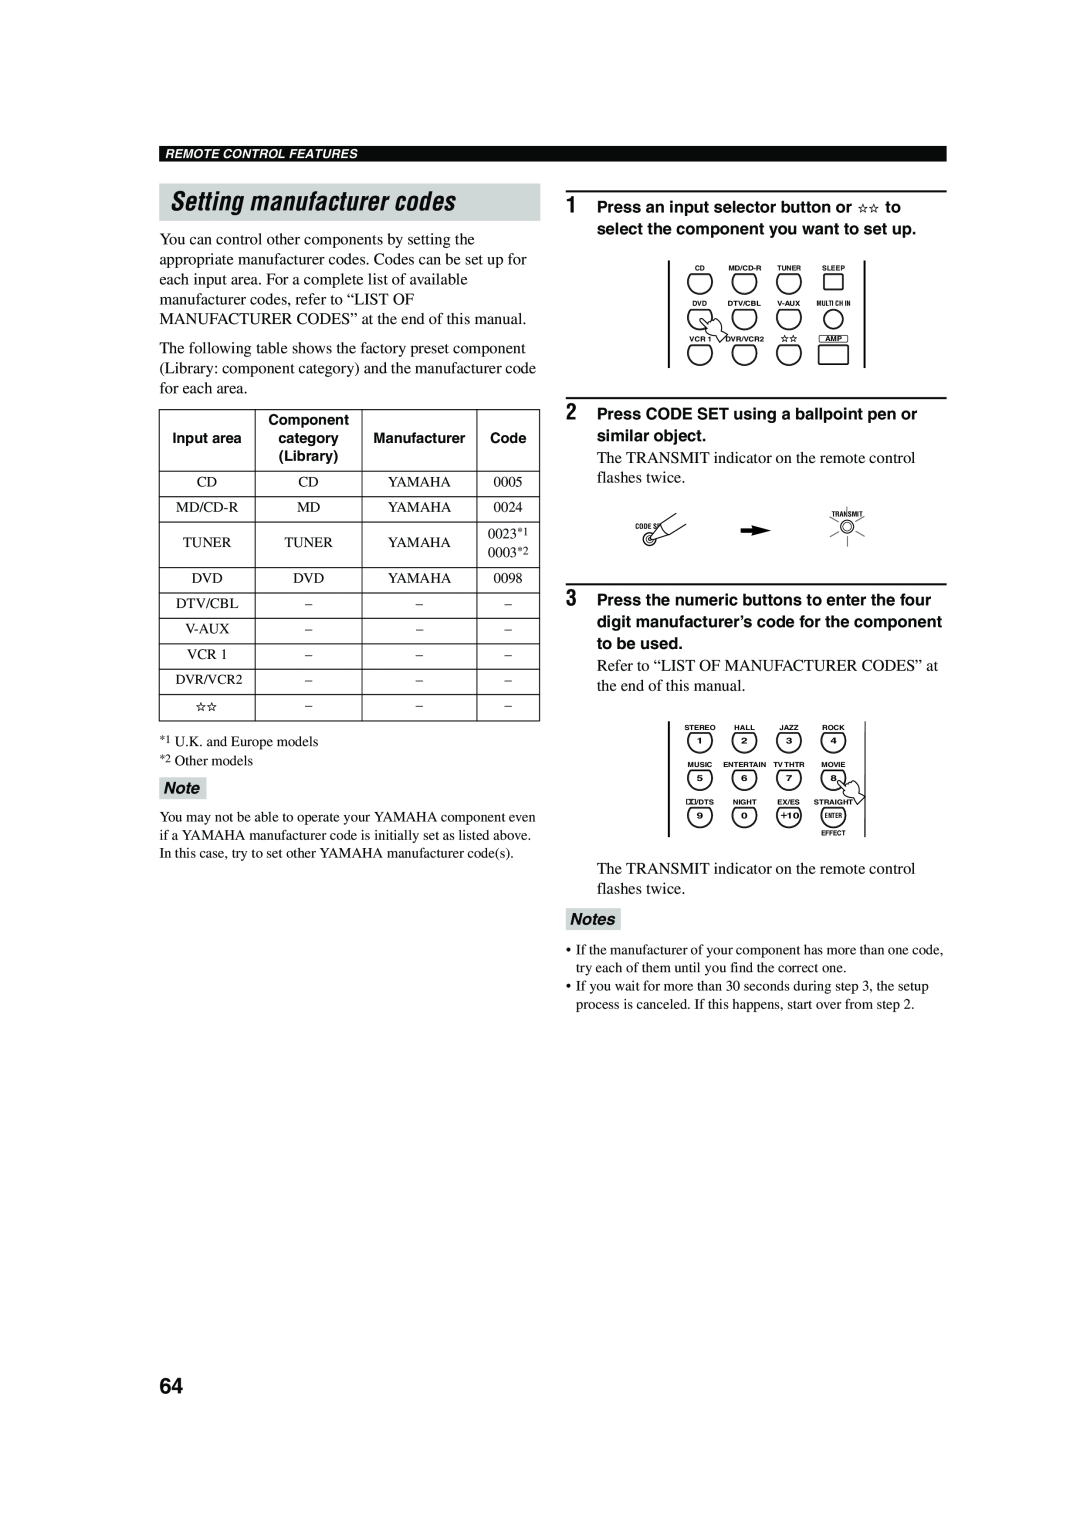 Yamaha RX-V650 owner manual Setting manufacturer codes, Component, Code 